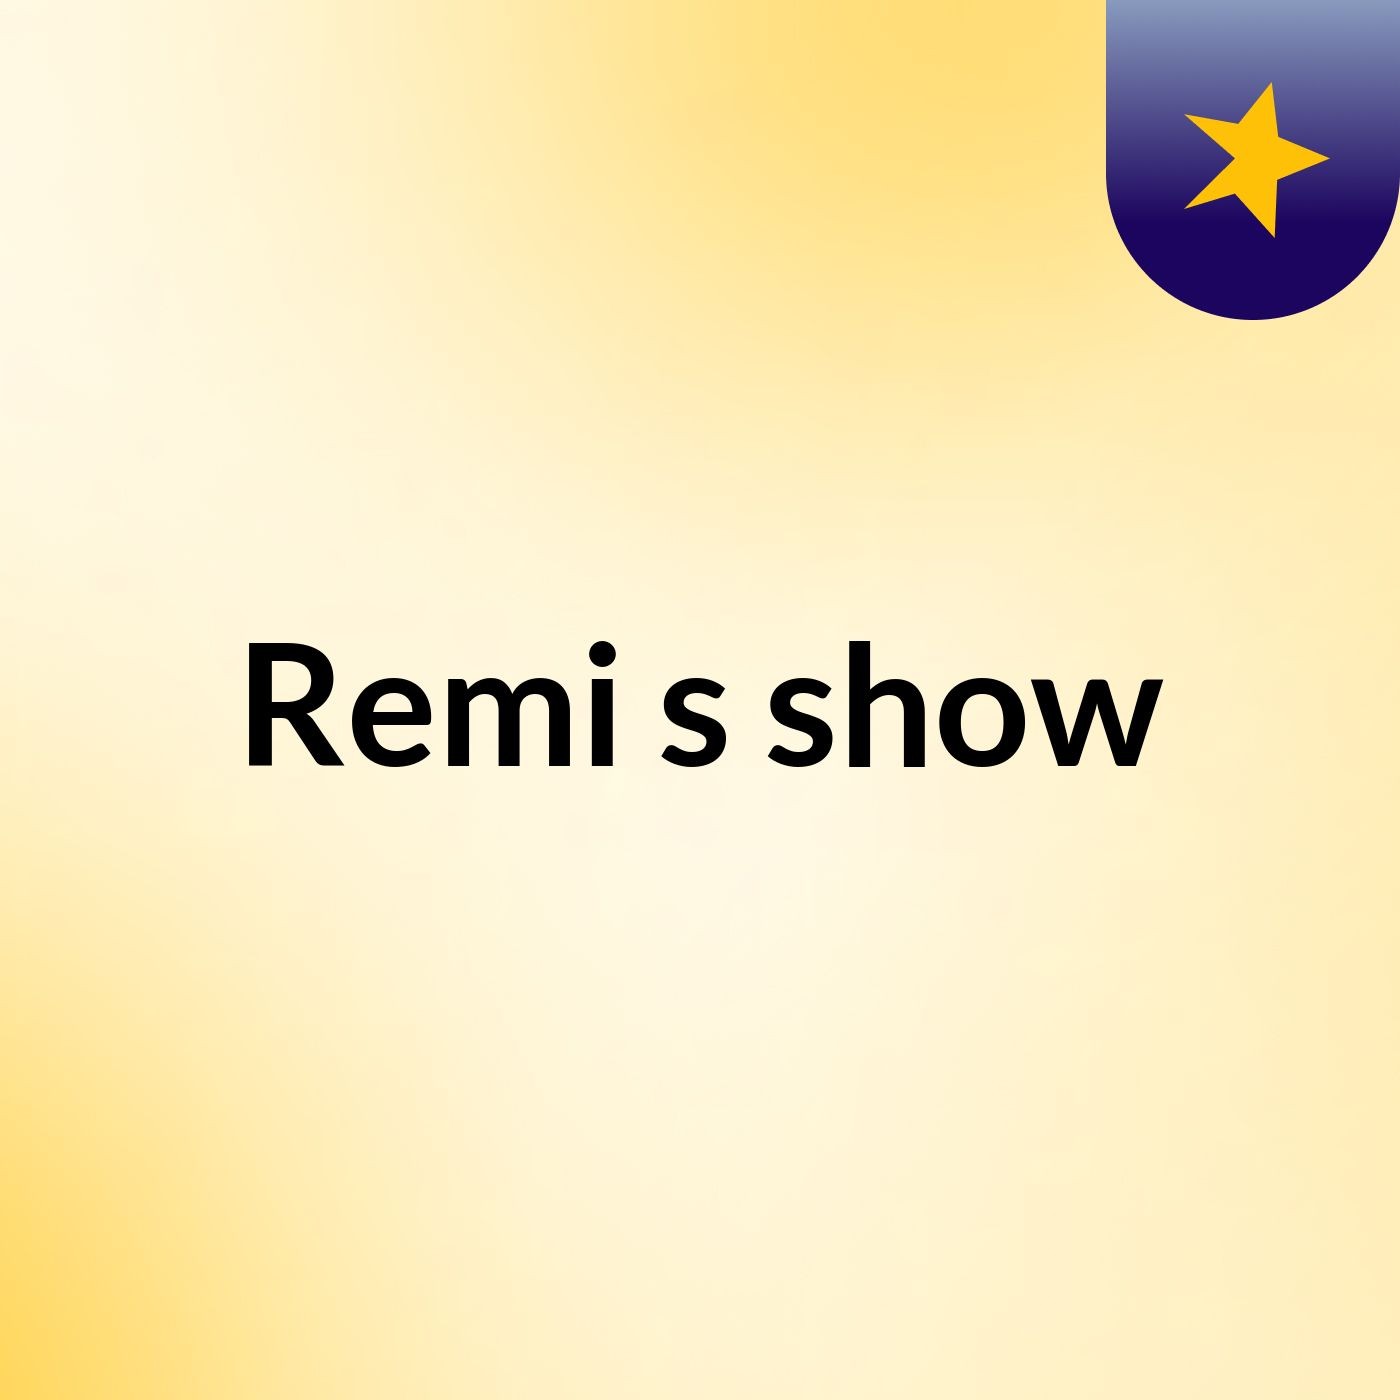 Remi's show